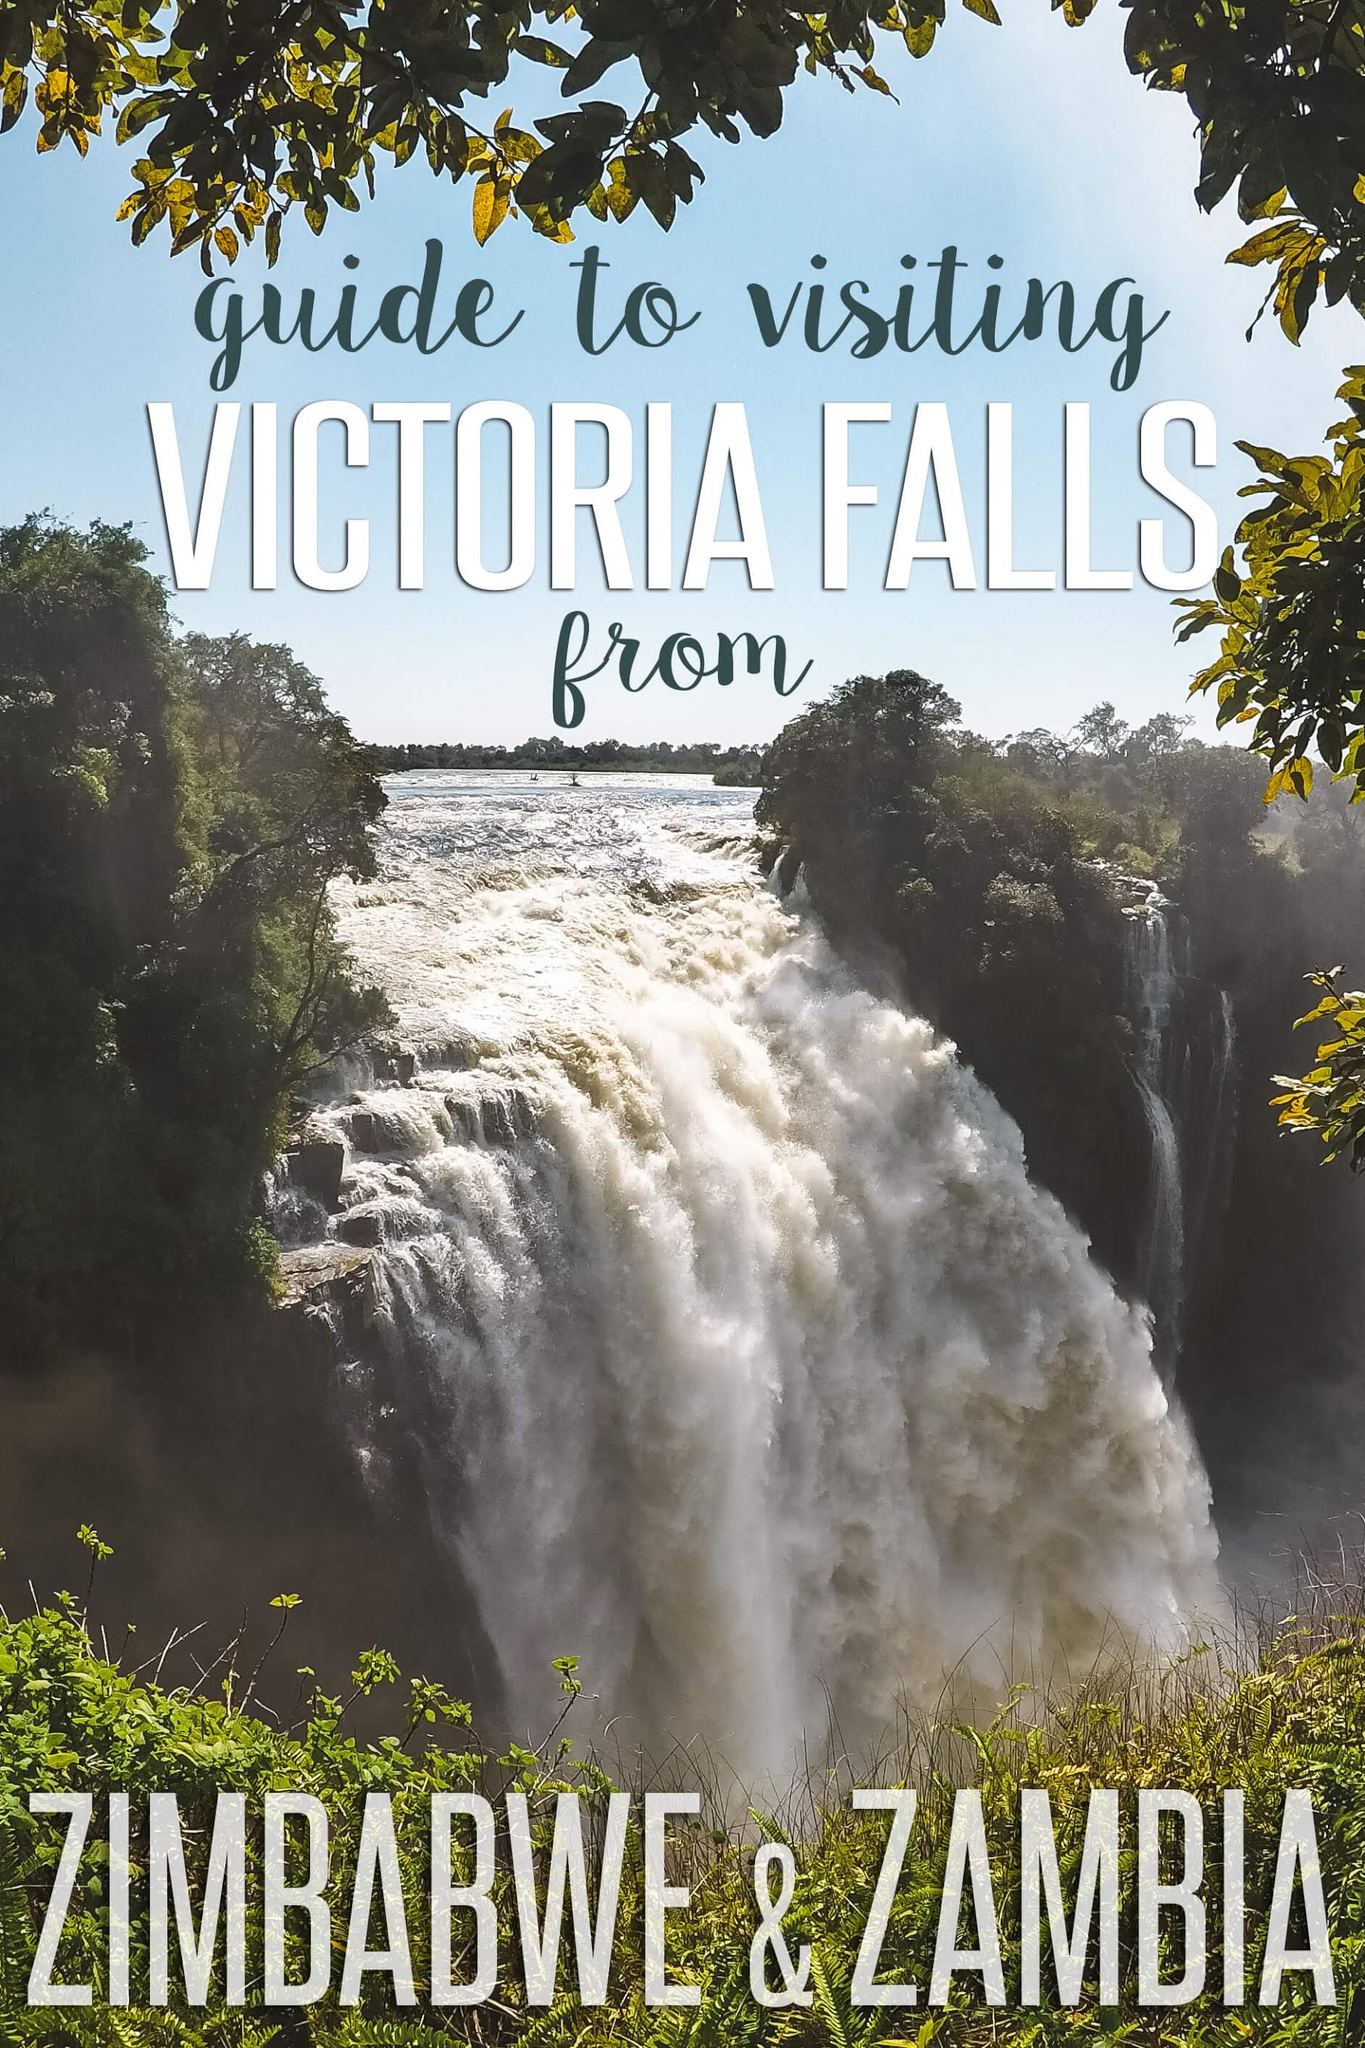 Visiting Victoria Falls from Zimbabwe and Zambia